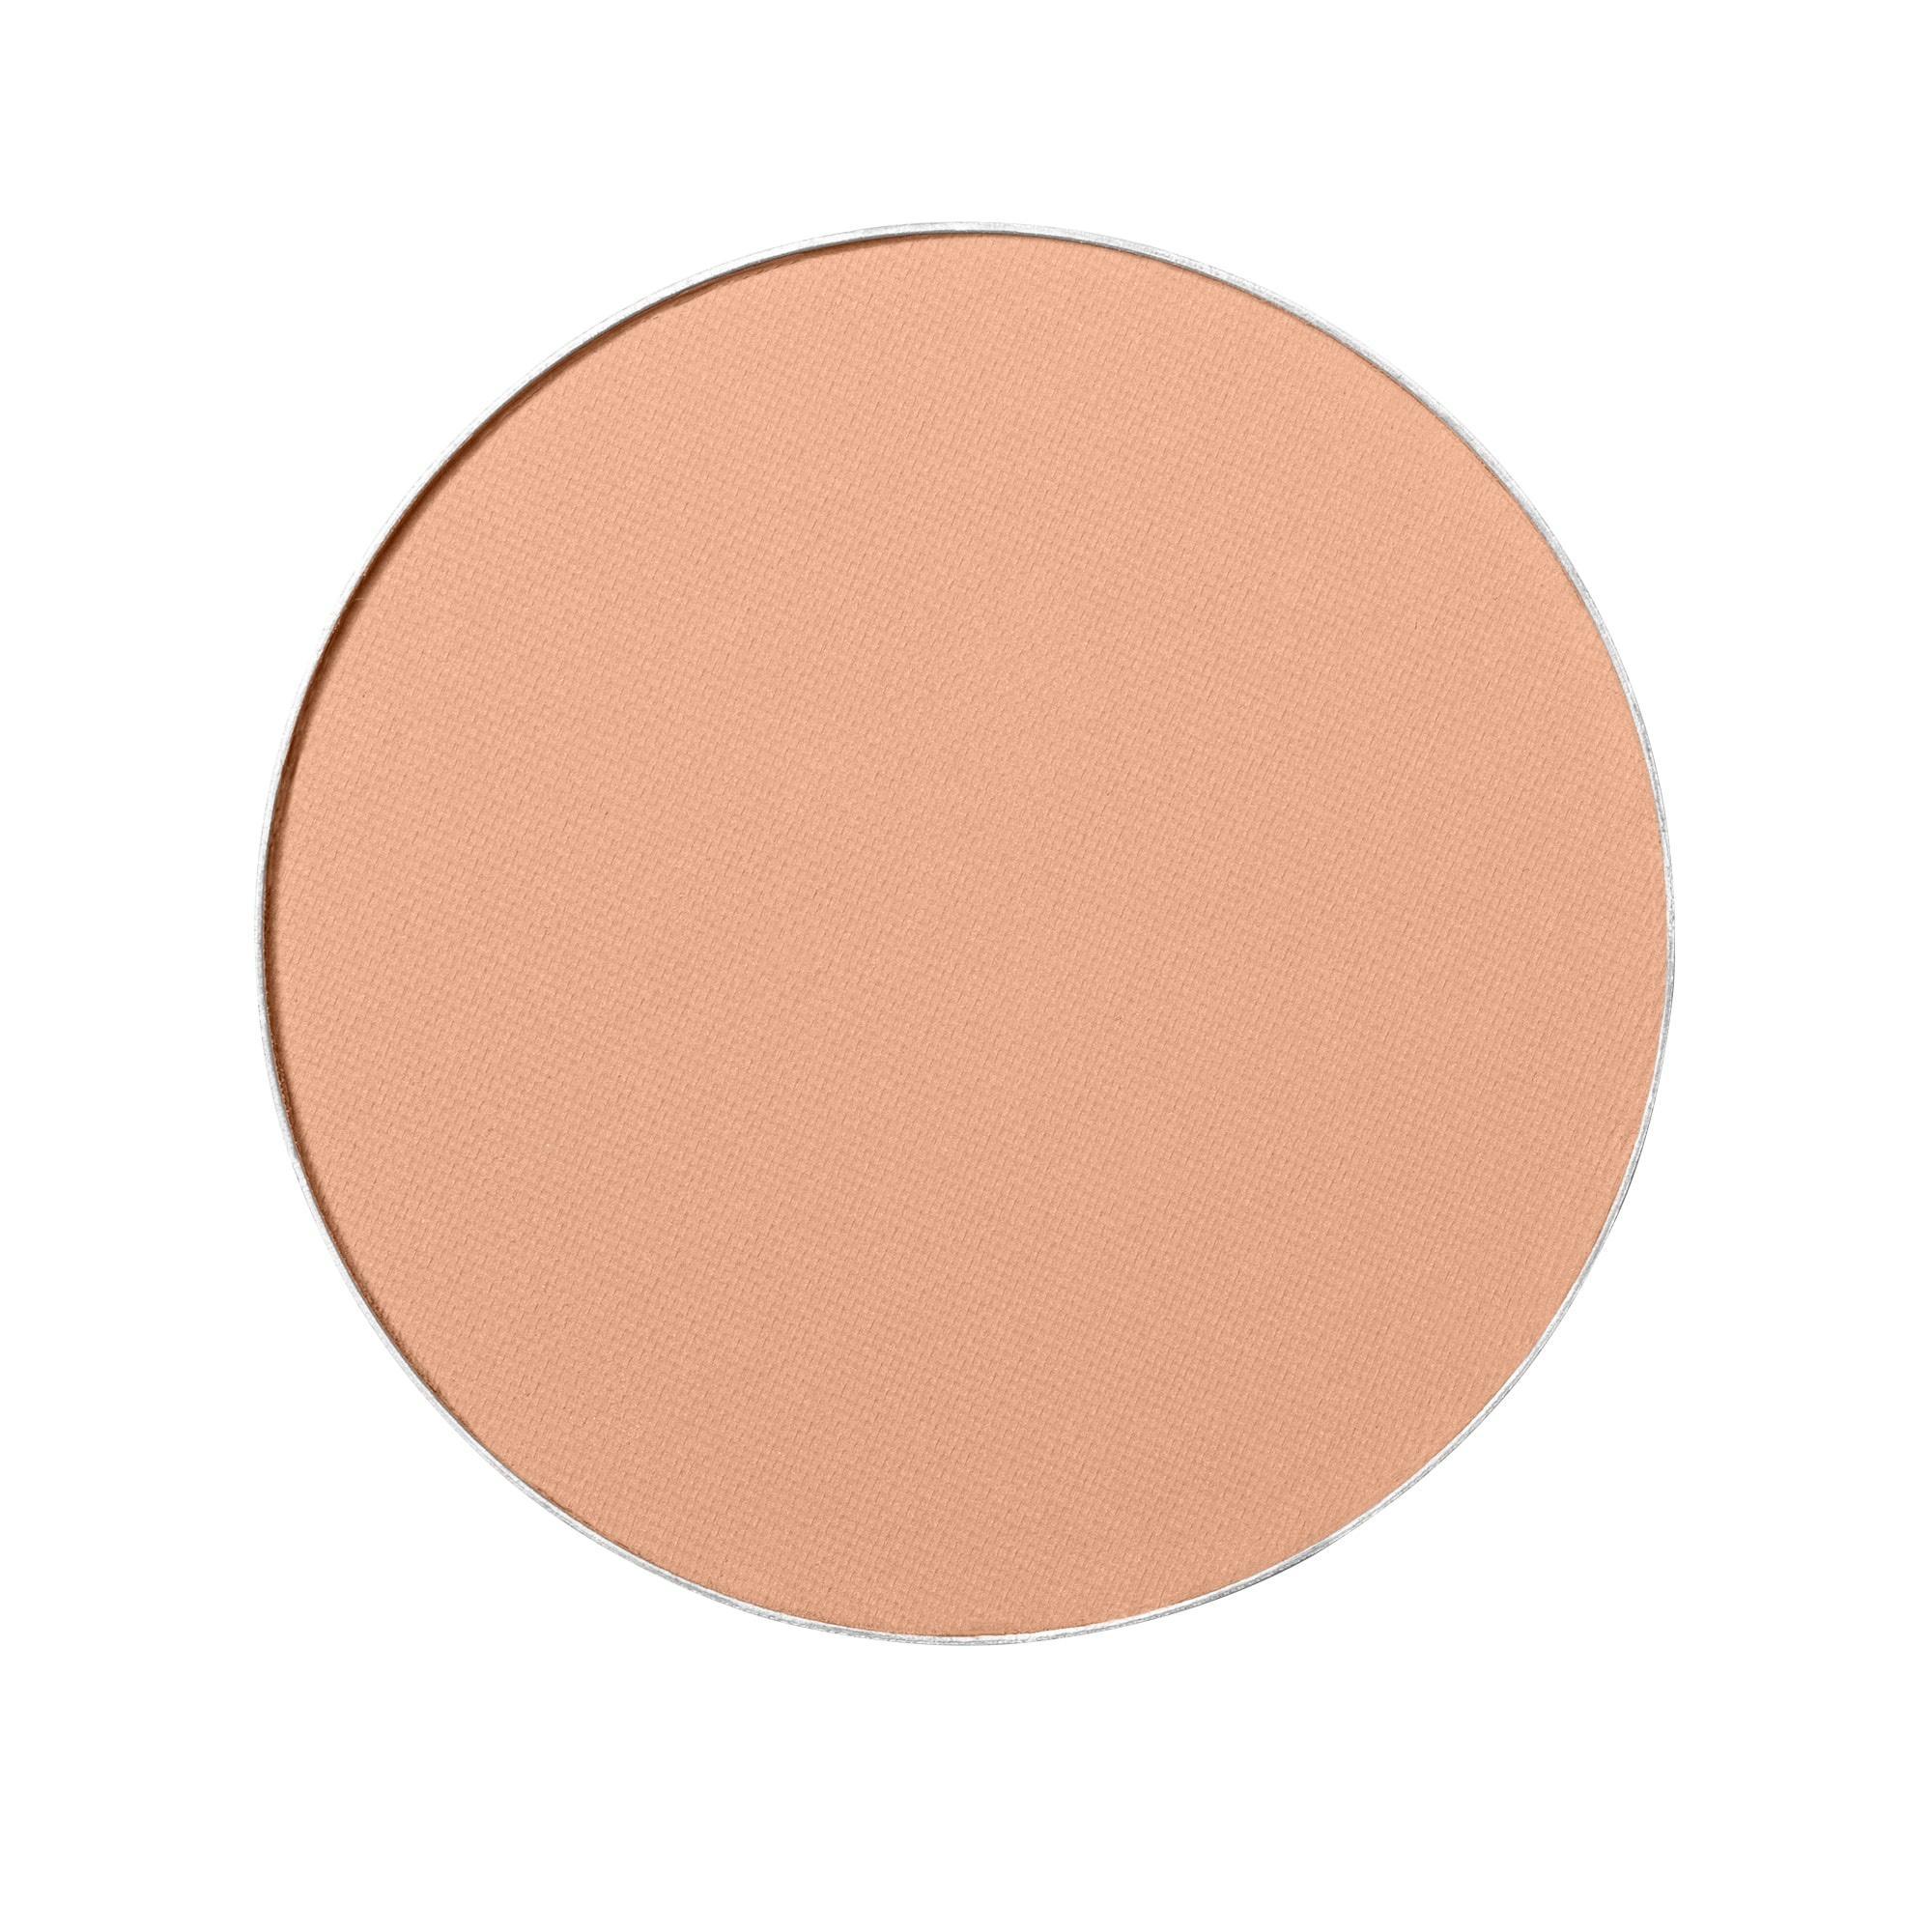 Shiseido Sun - uv protective compact foundation spf30 refill medium beige